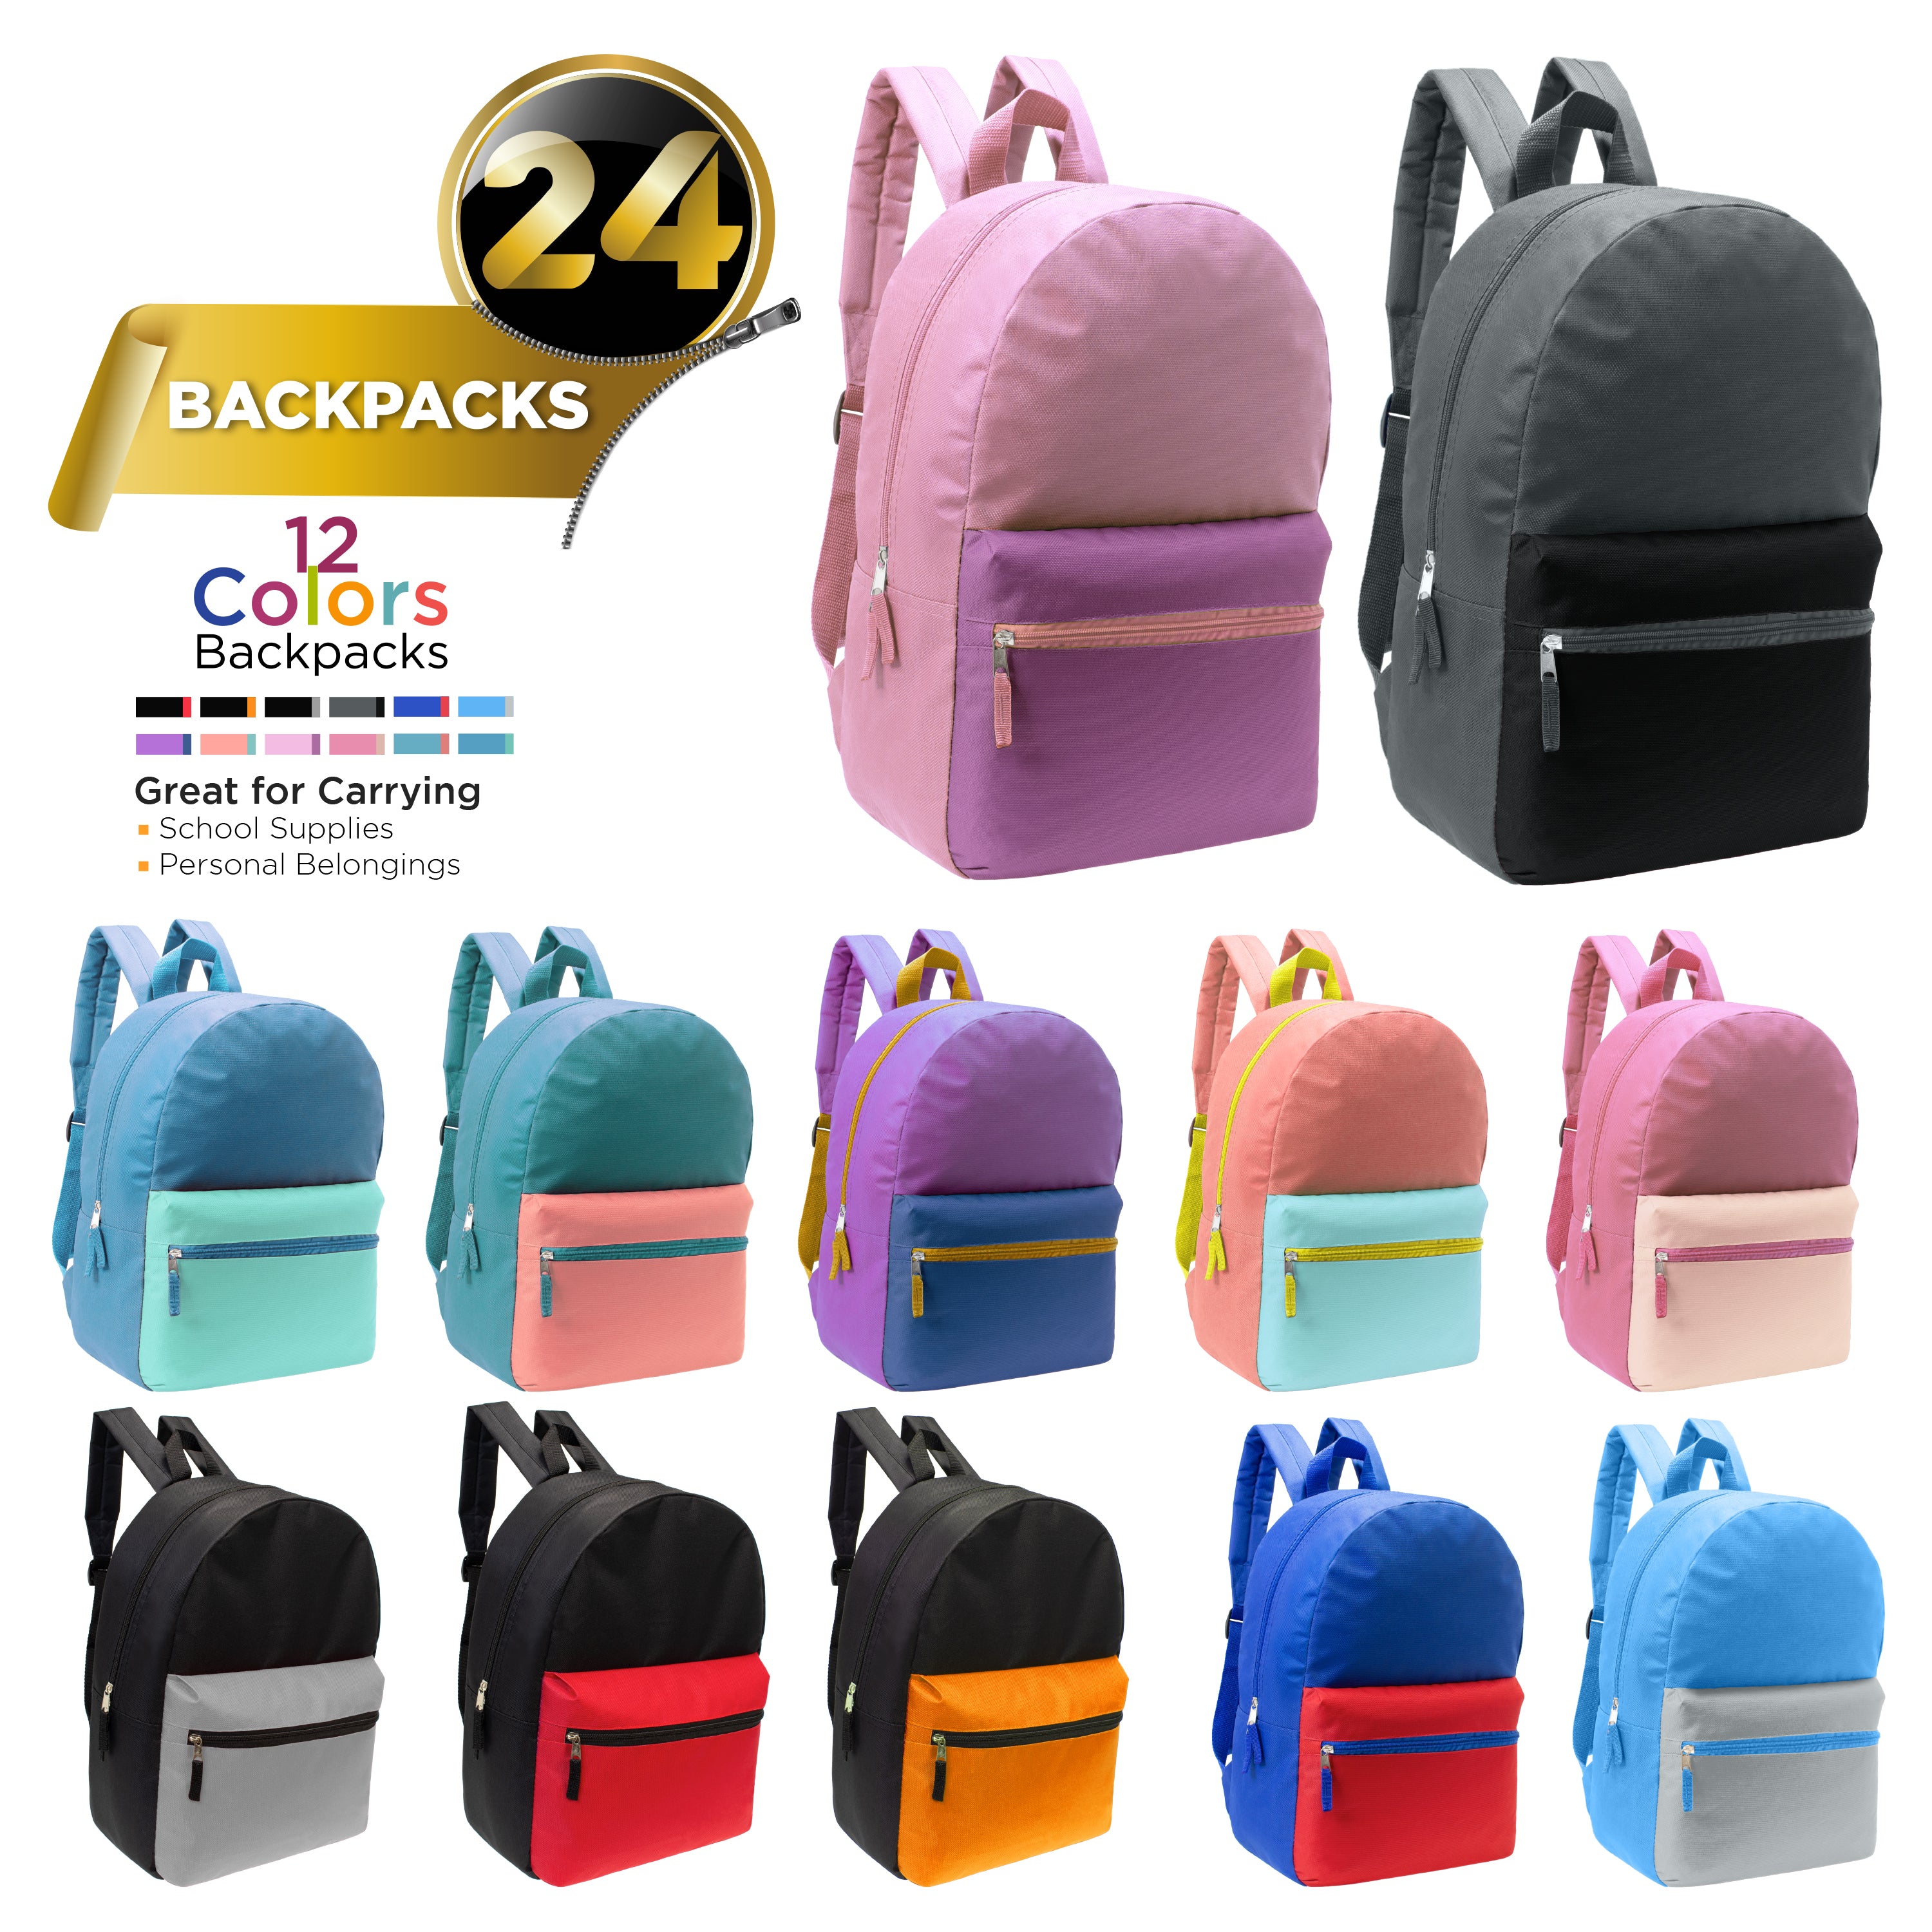 bulk backpacks in 12 two tone colors SKU: BAPA-284-24